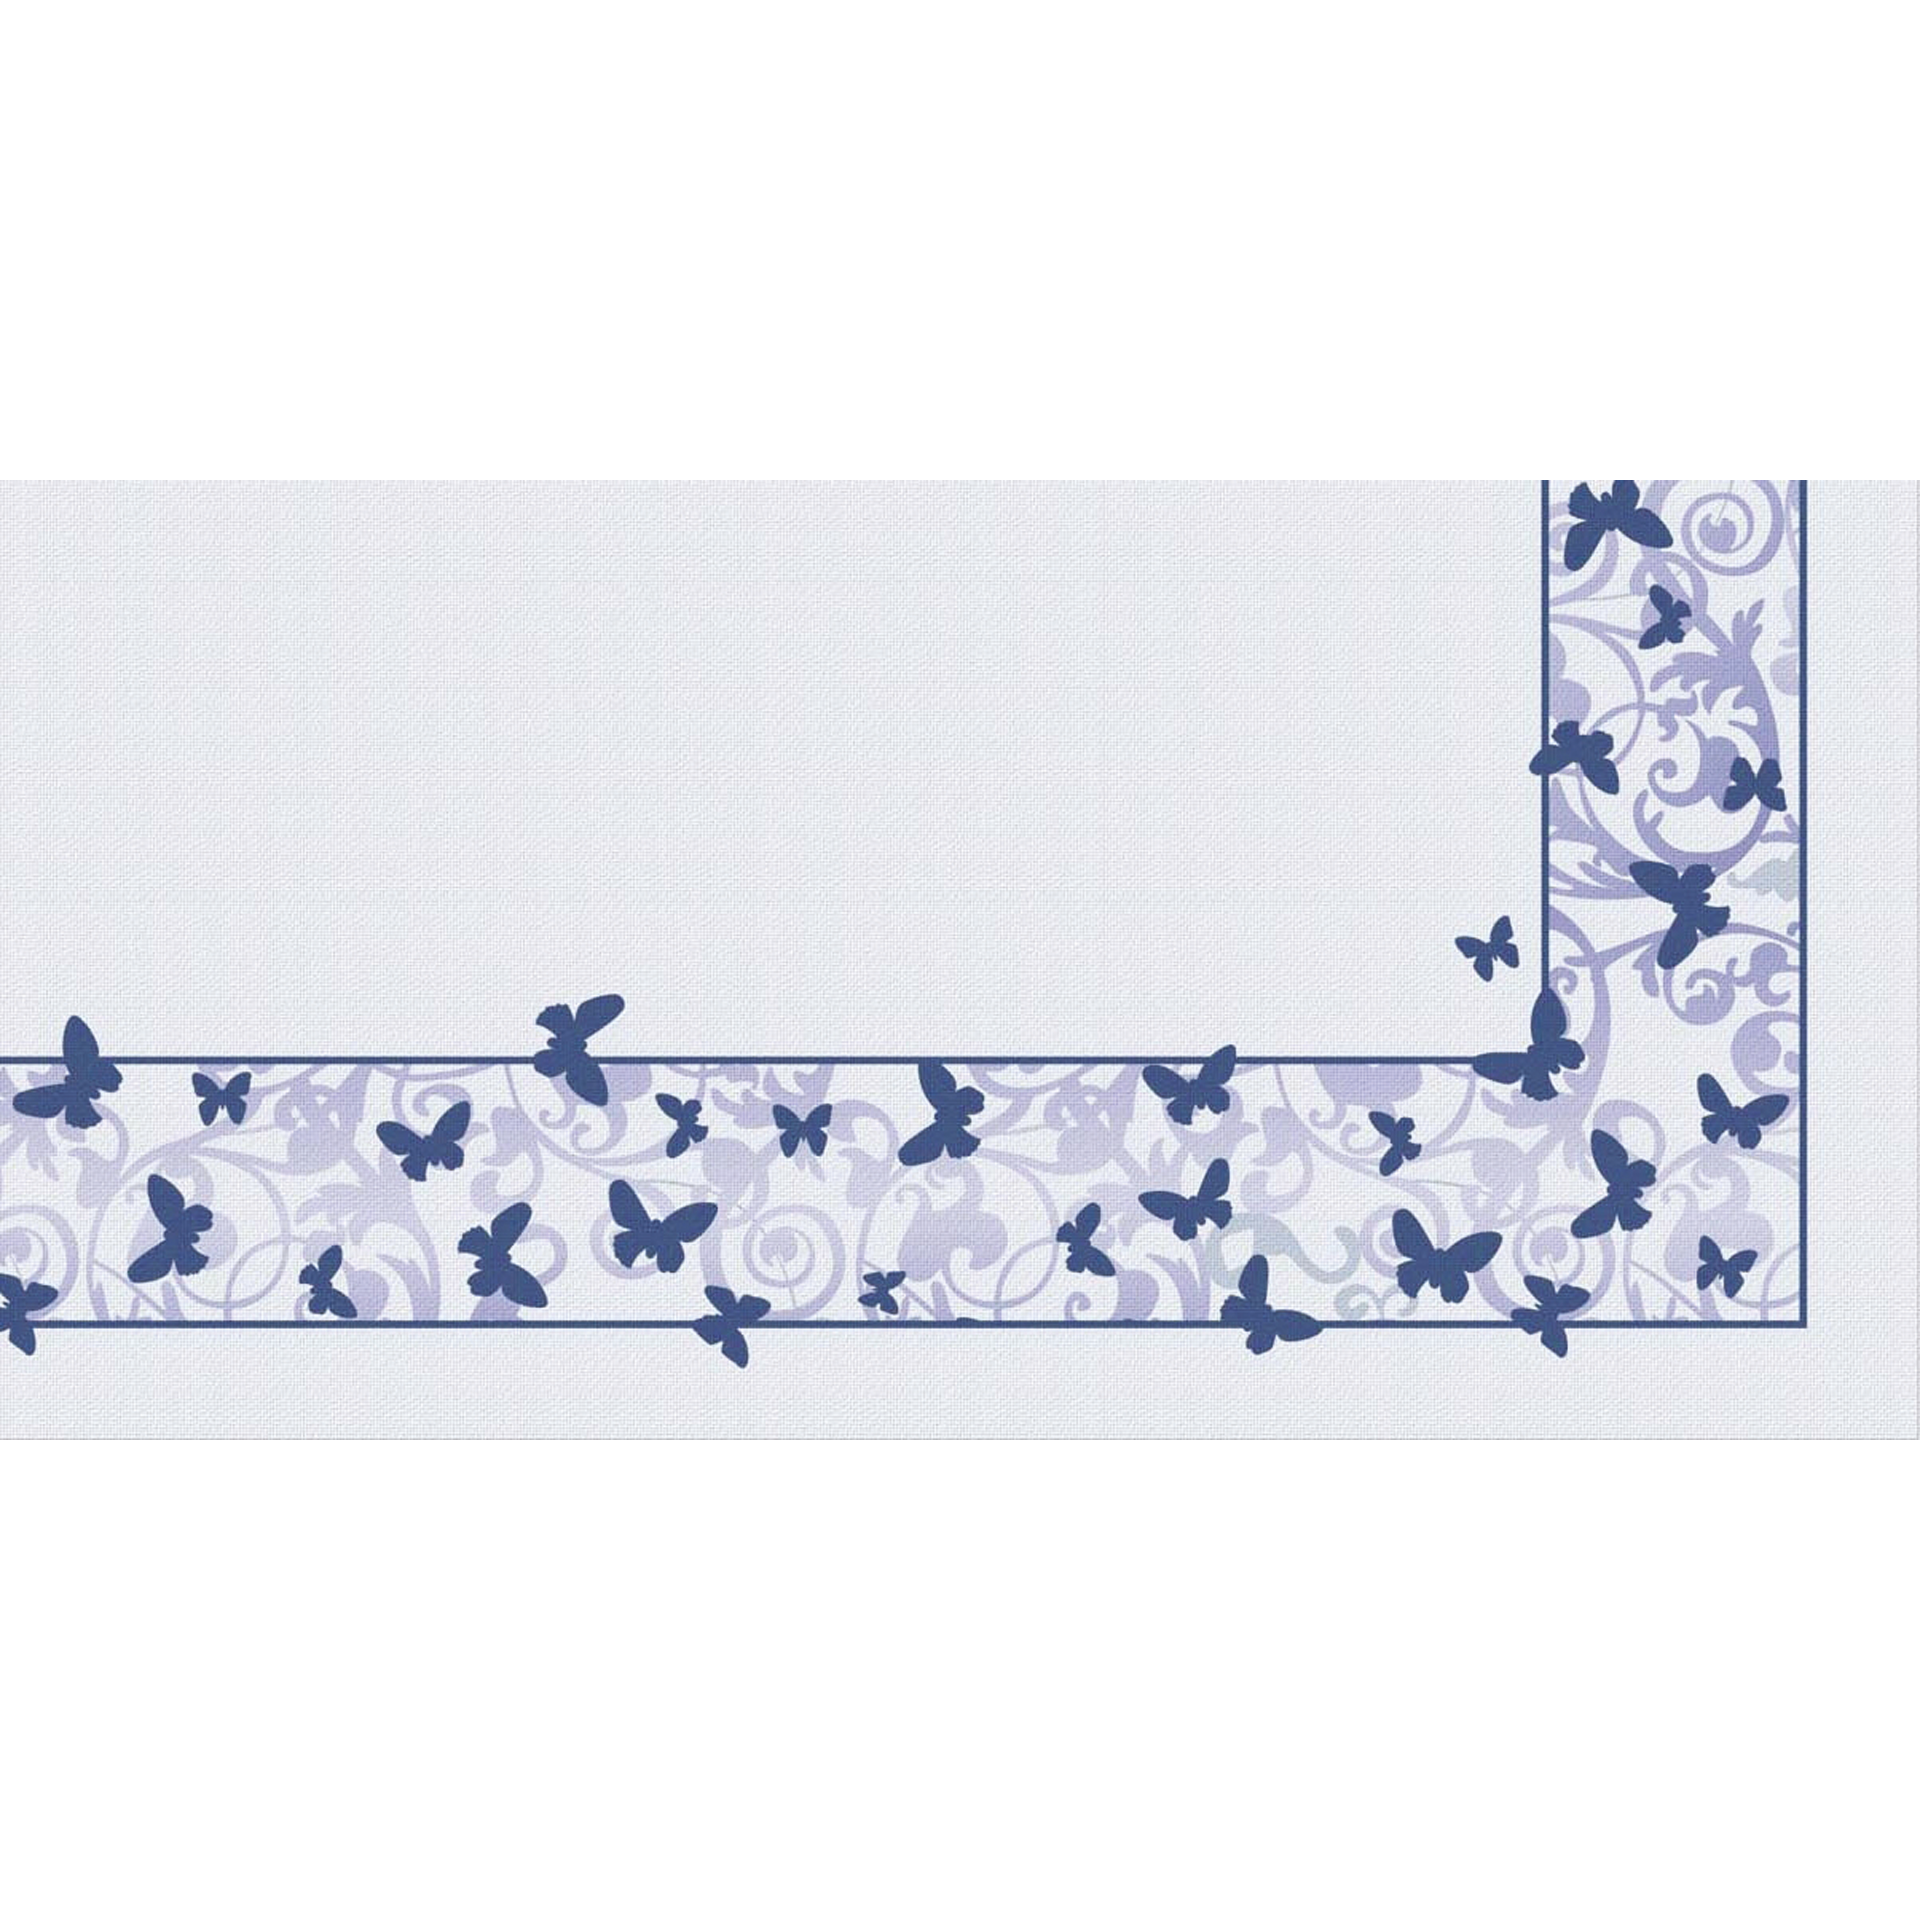 Aufleger Airlaid 100x100 cm beschichtet Butterfly grau/blau  